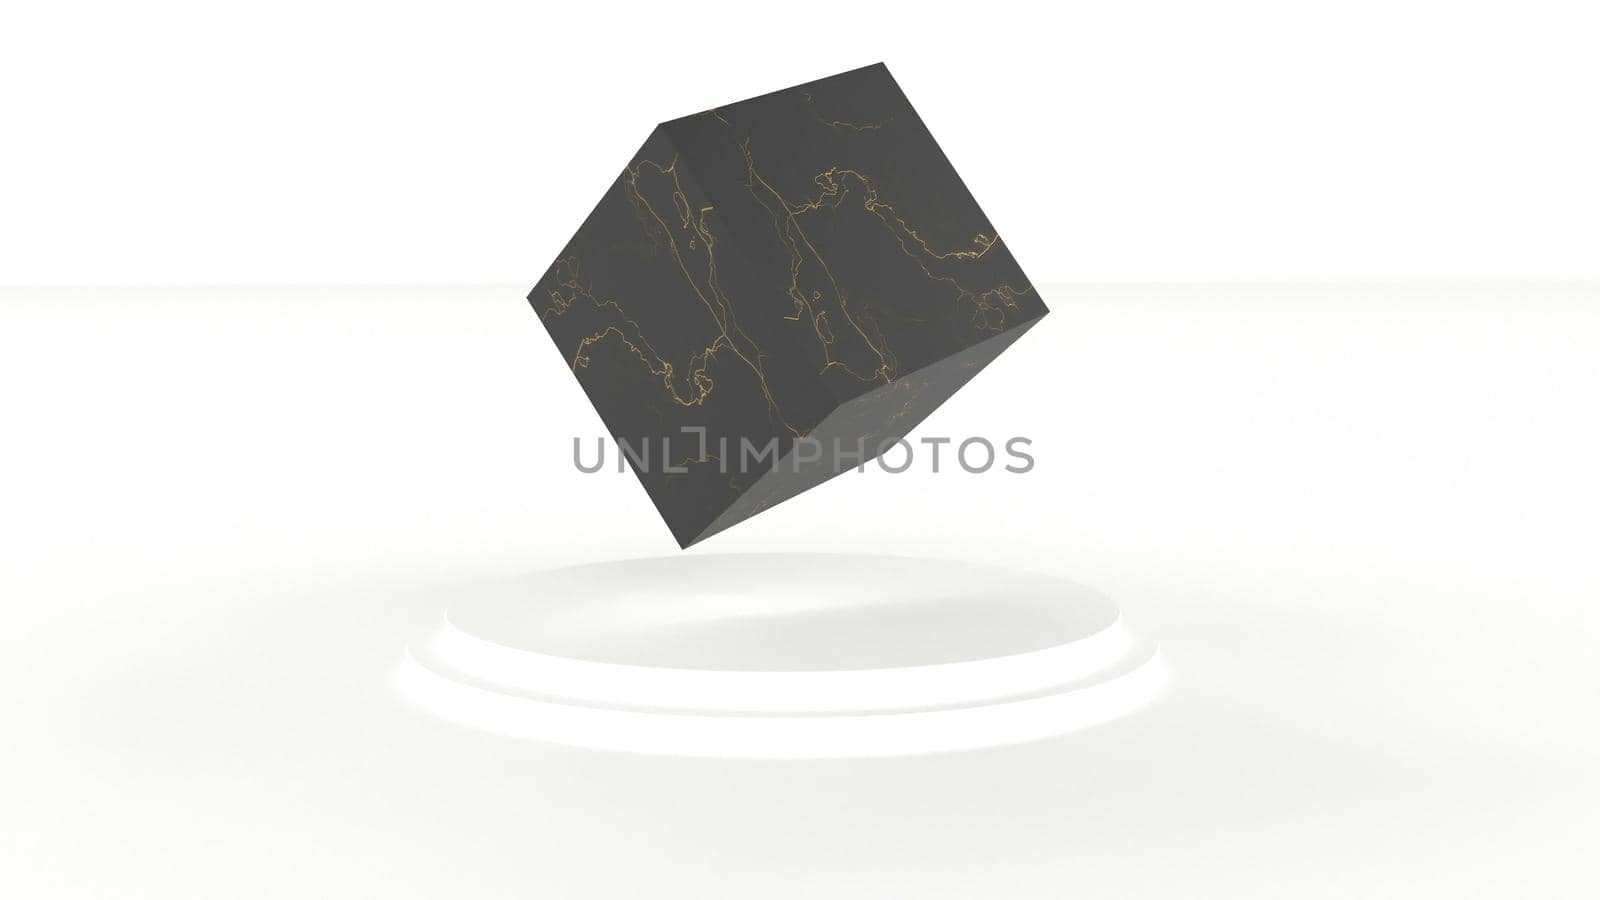 Trendy white pedestal mockup black box rotate minimalism 3d style 3d render by Zozulinskyi